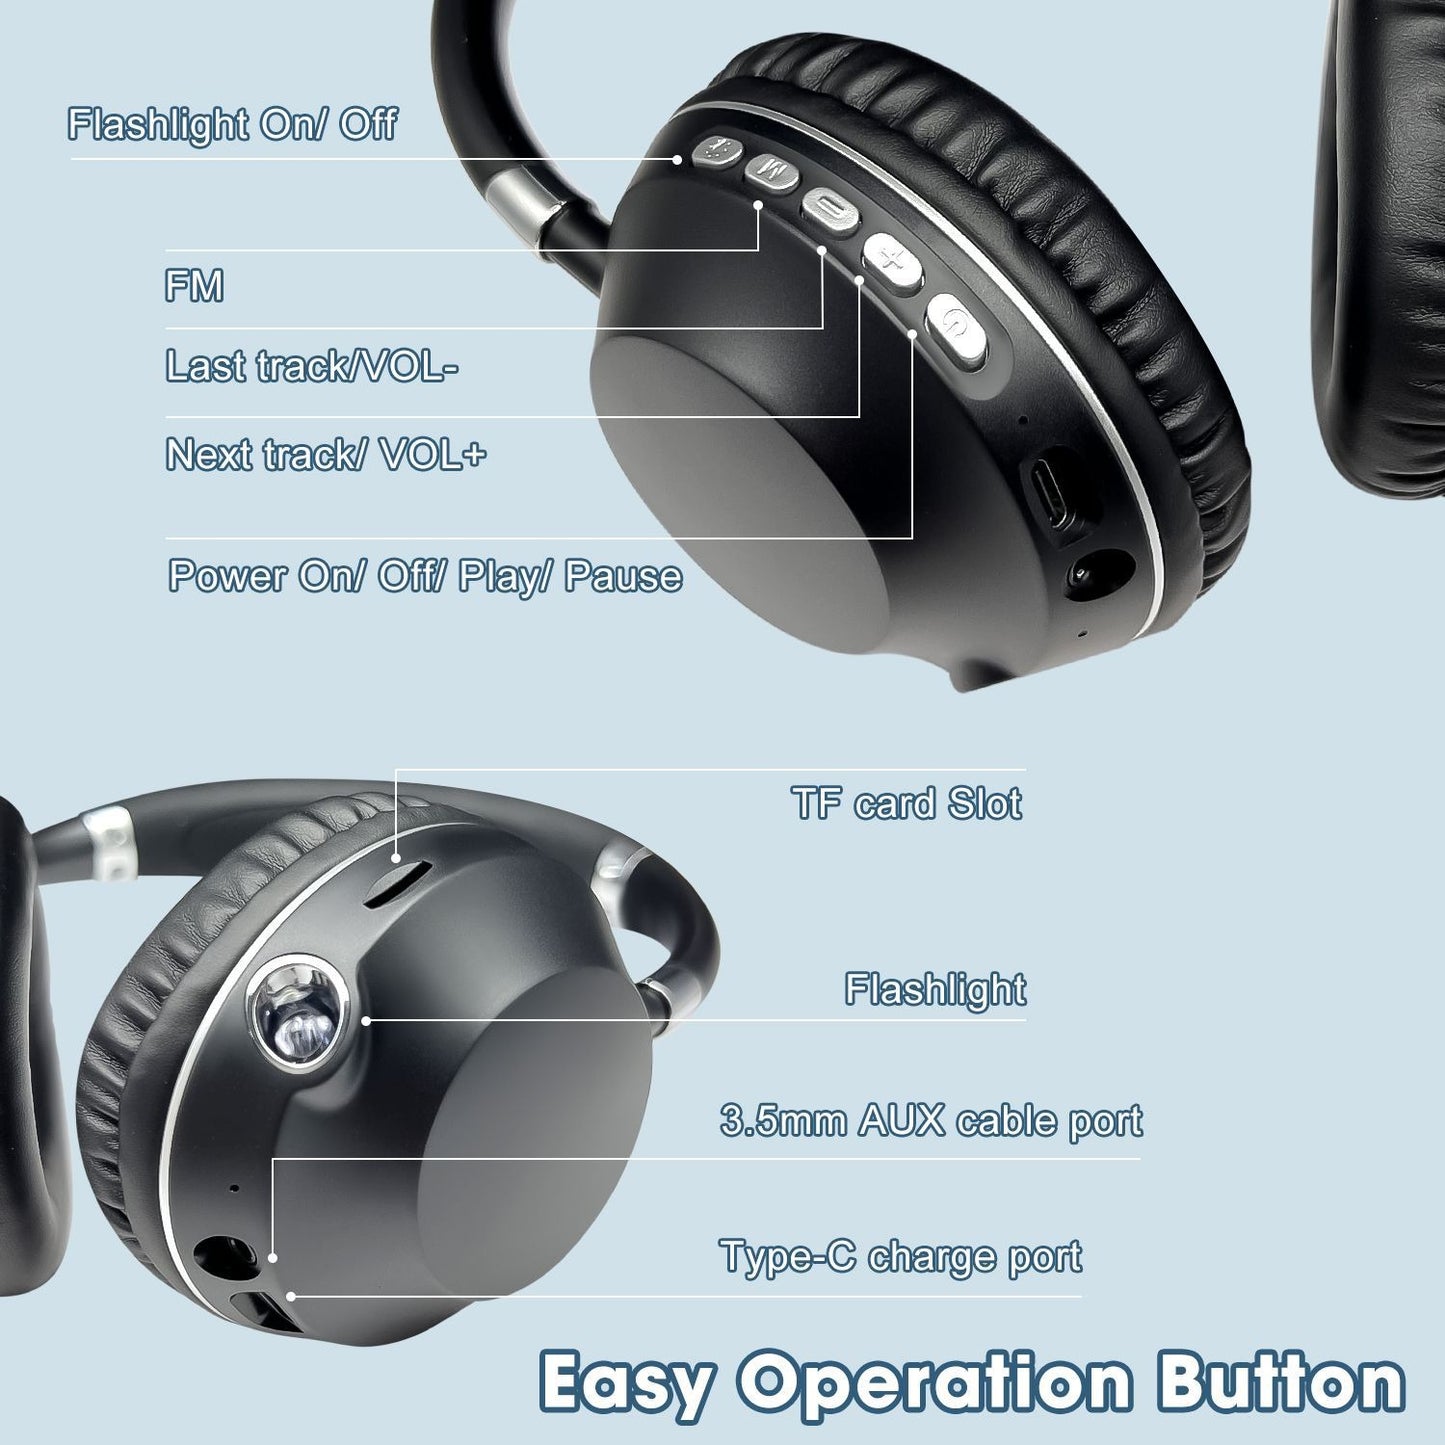 Wireless new Bluetooth headset with high power flashlight lighting headset AKZ-K59 card FM